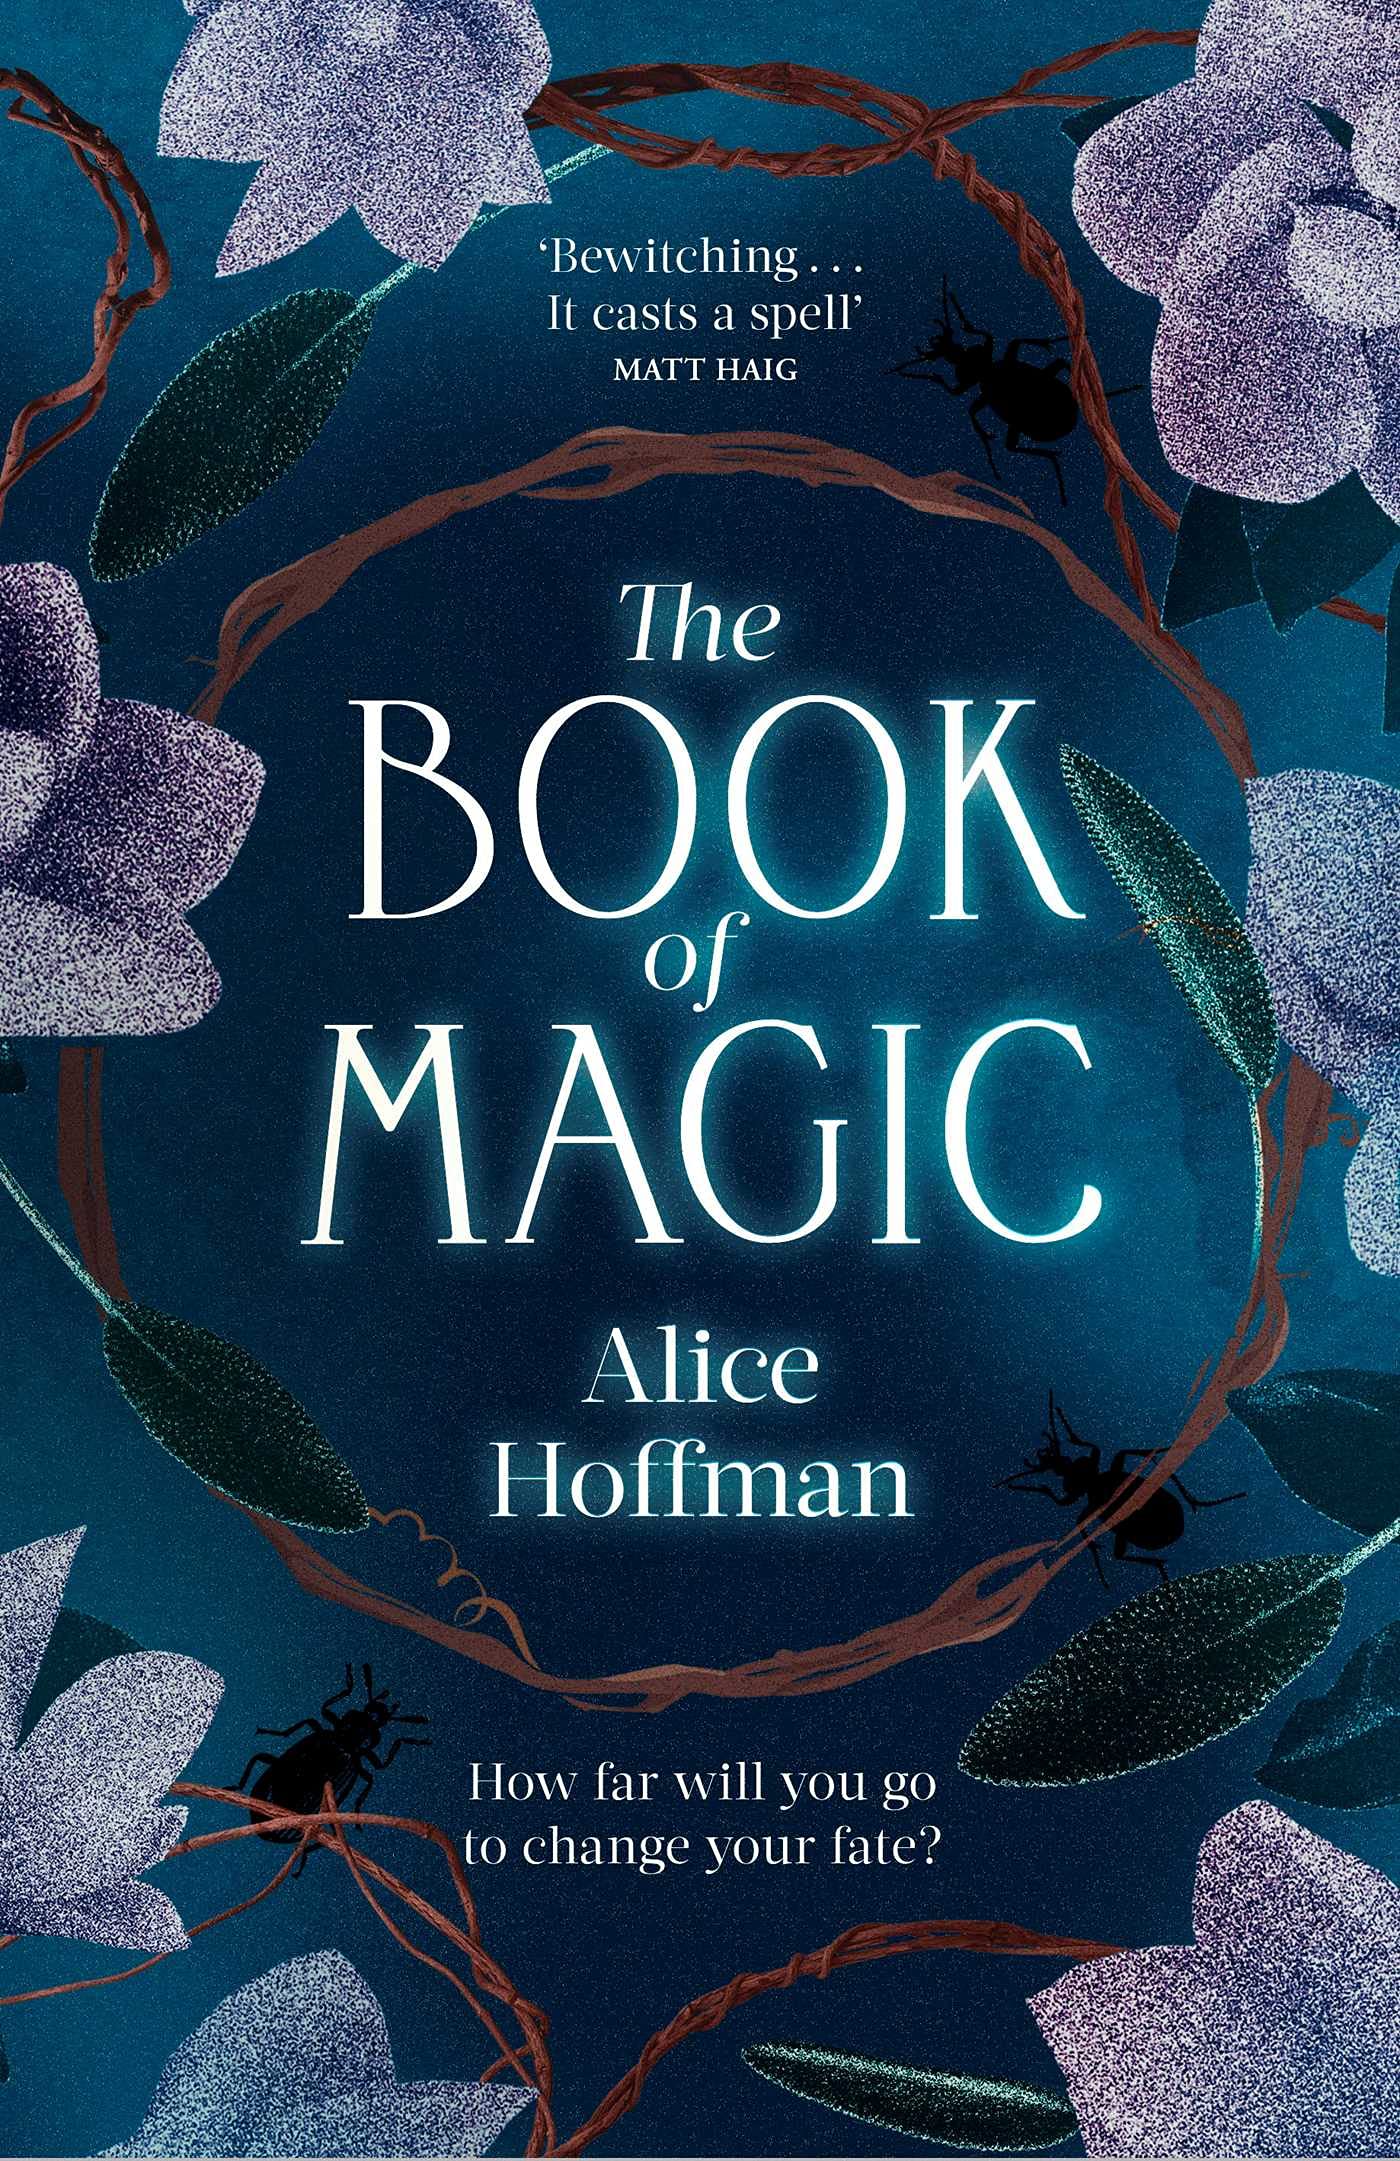 The Books of Magic - Wikipedia